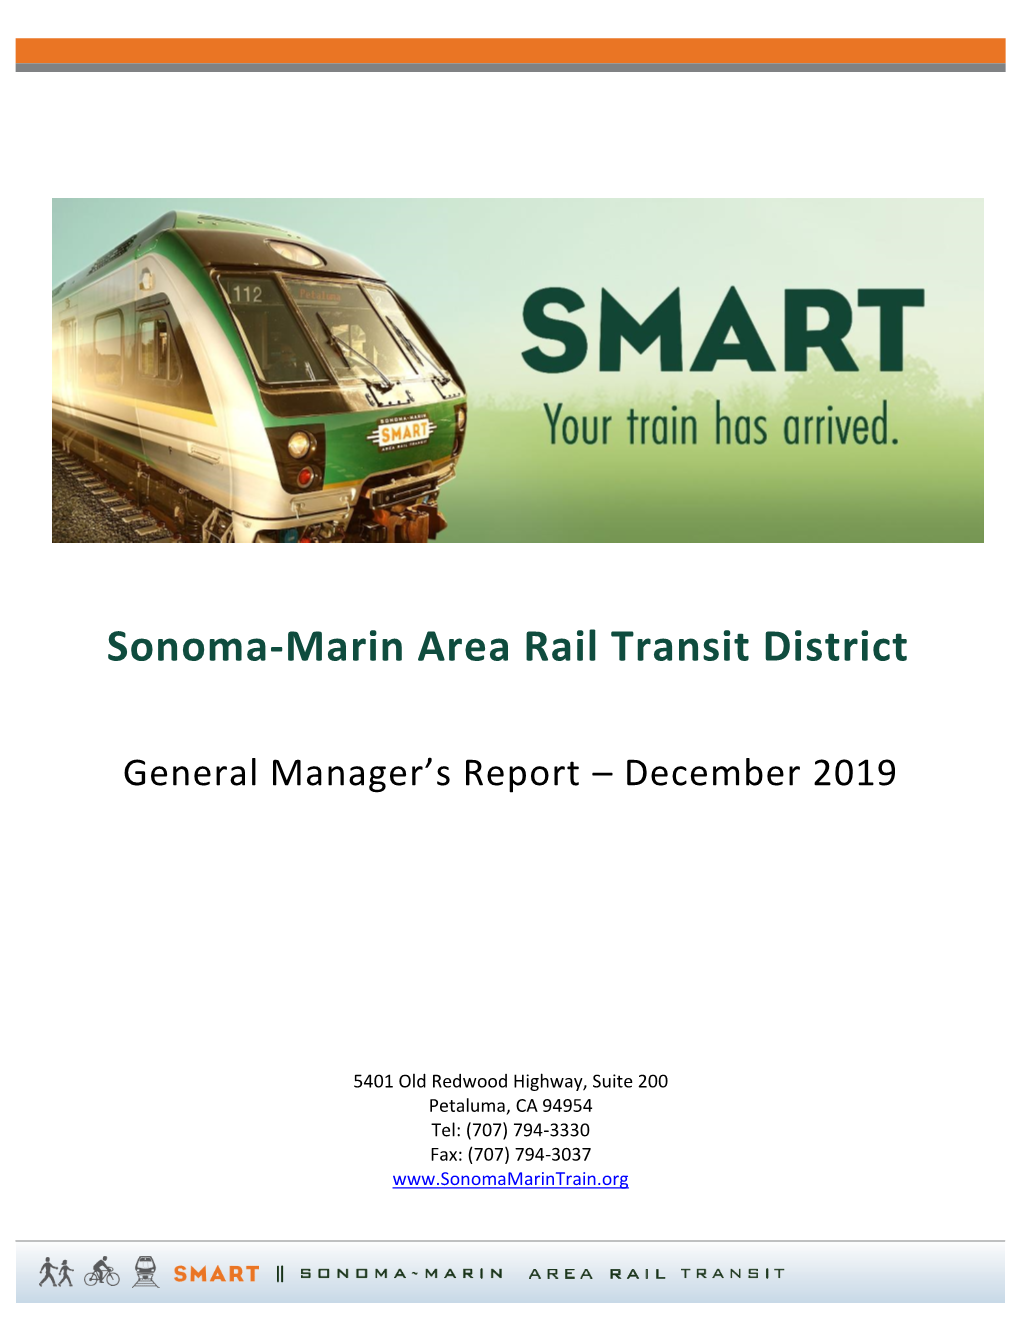 Sonoma-Marin Area Rail Transit District